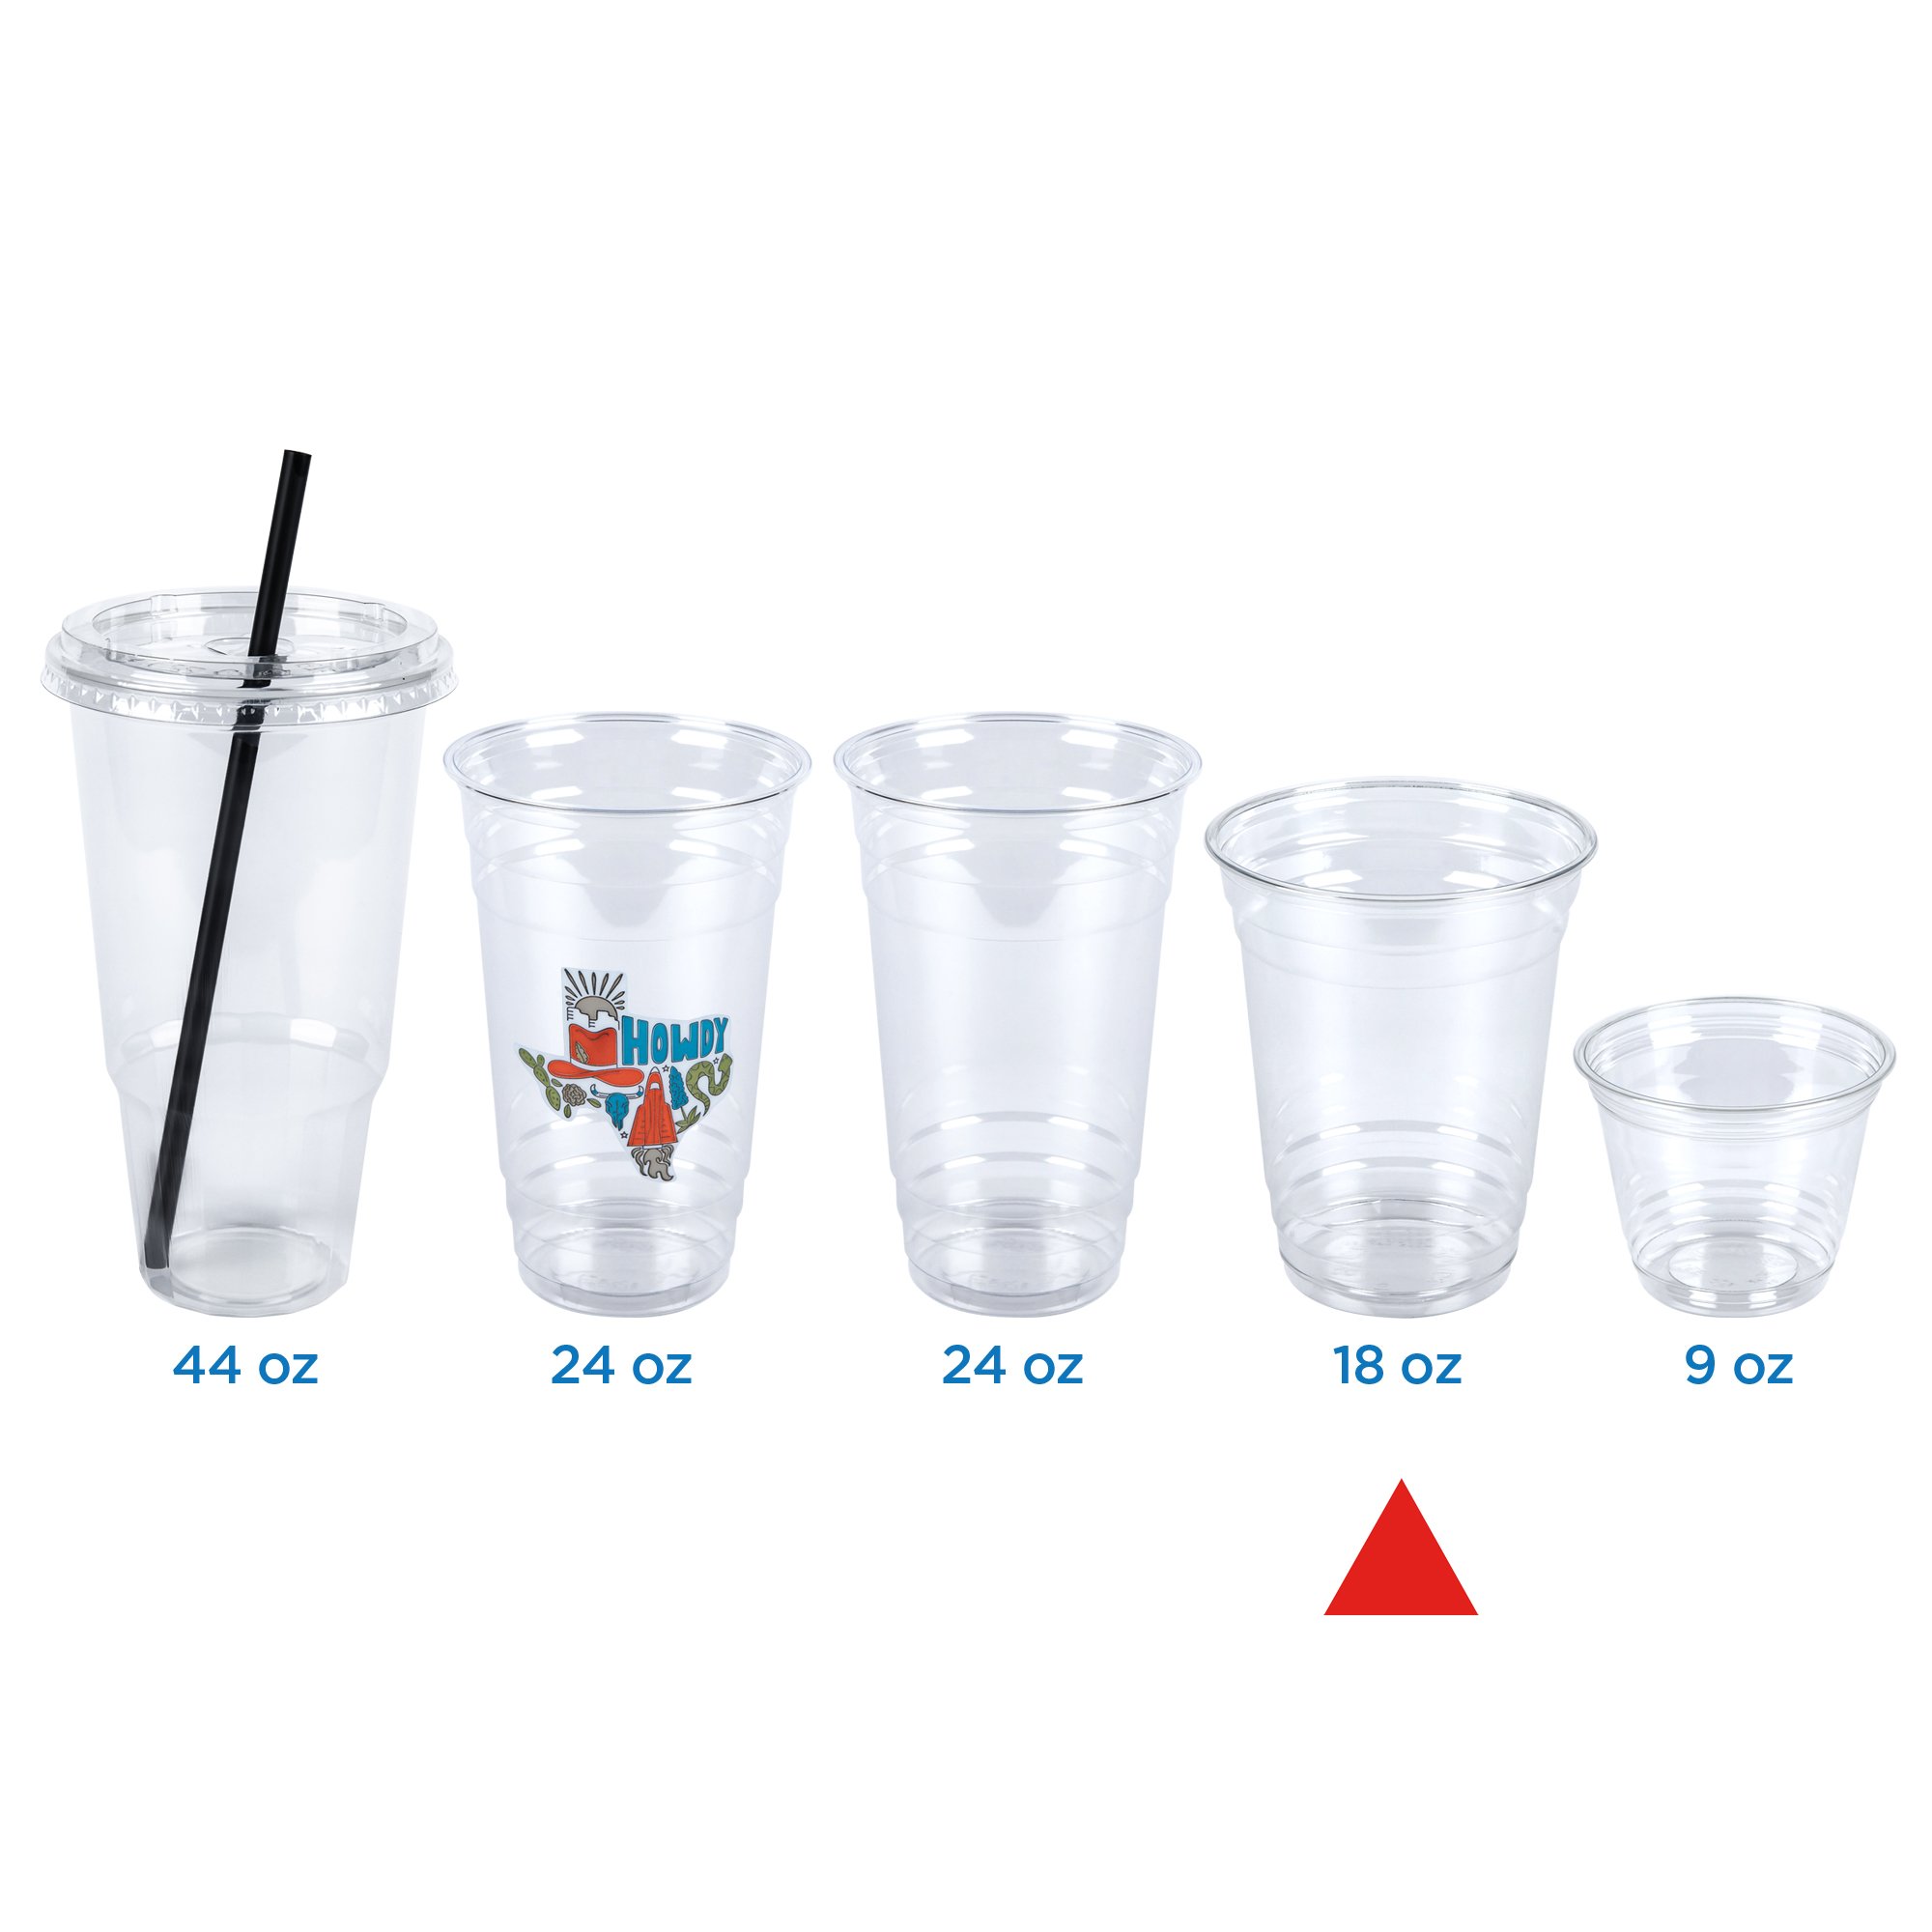 H-E-B 3 oz Multipurpose Paper Cups - Shop Drinkware at H-E-B